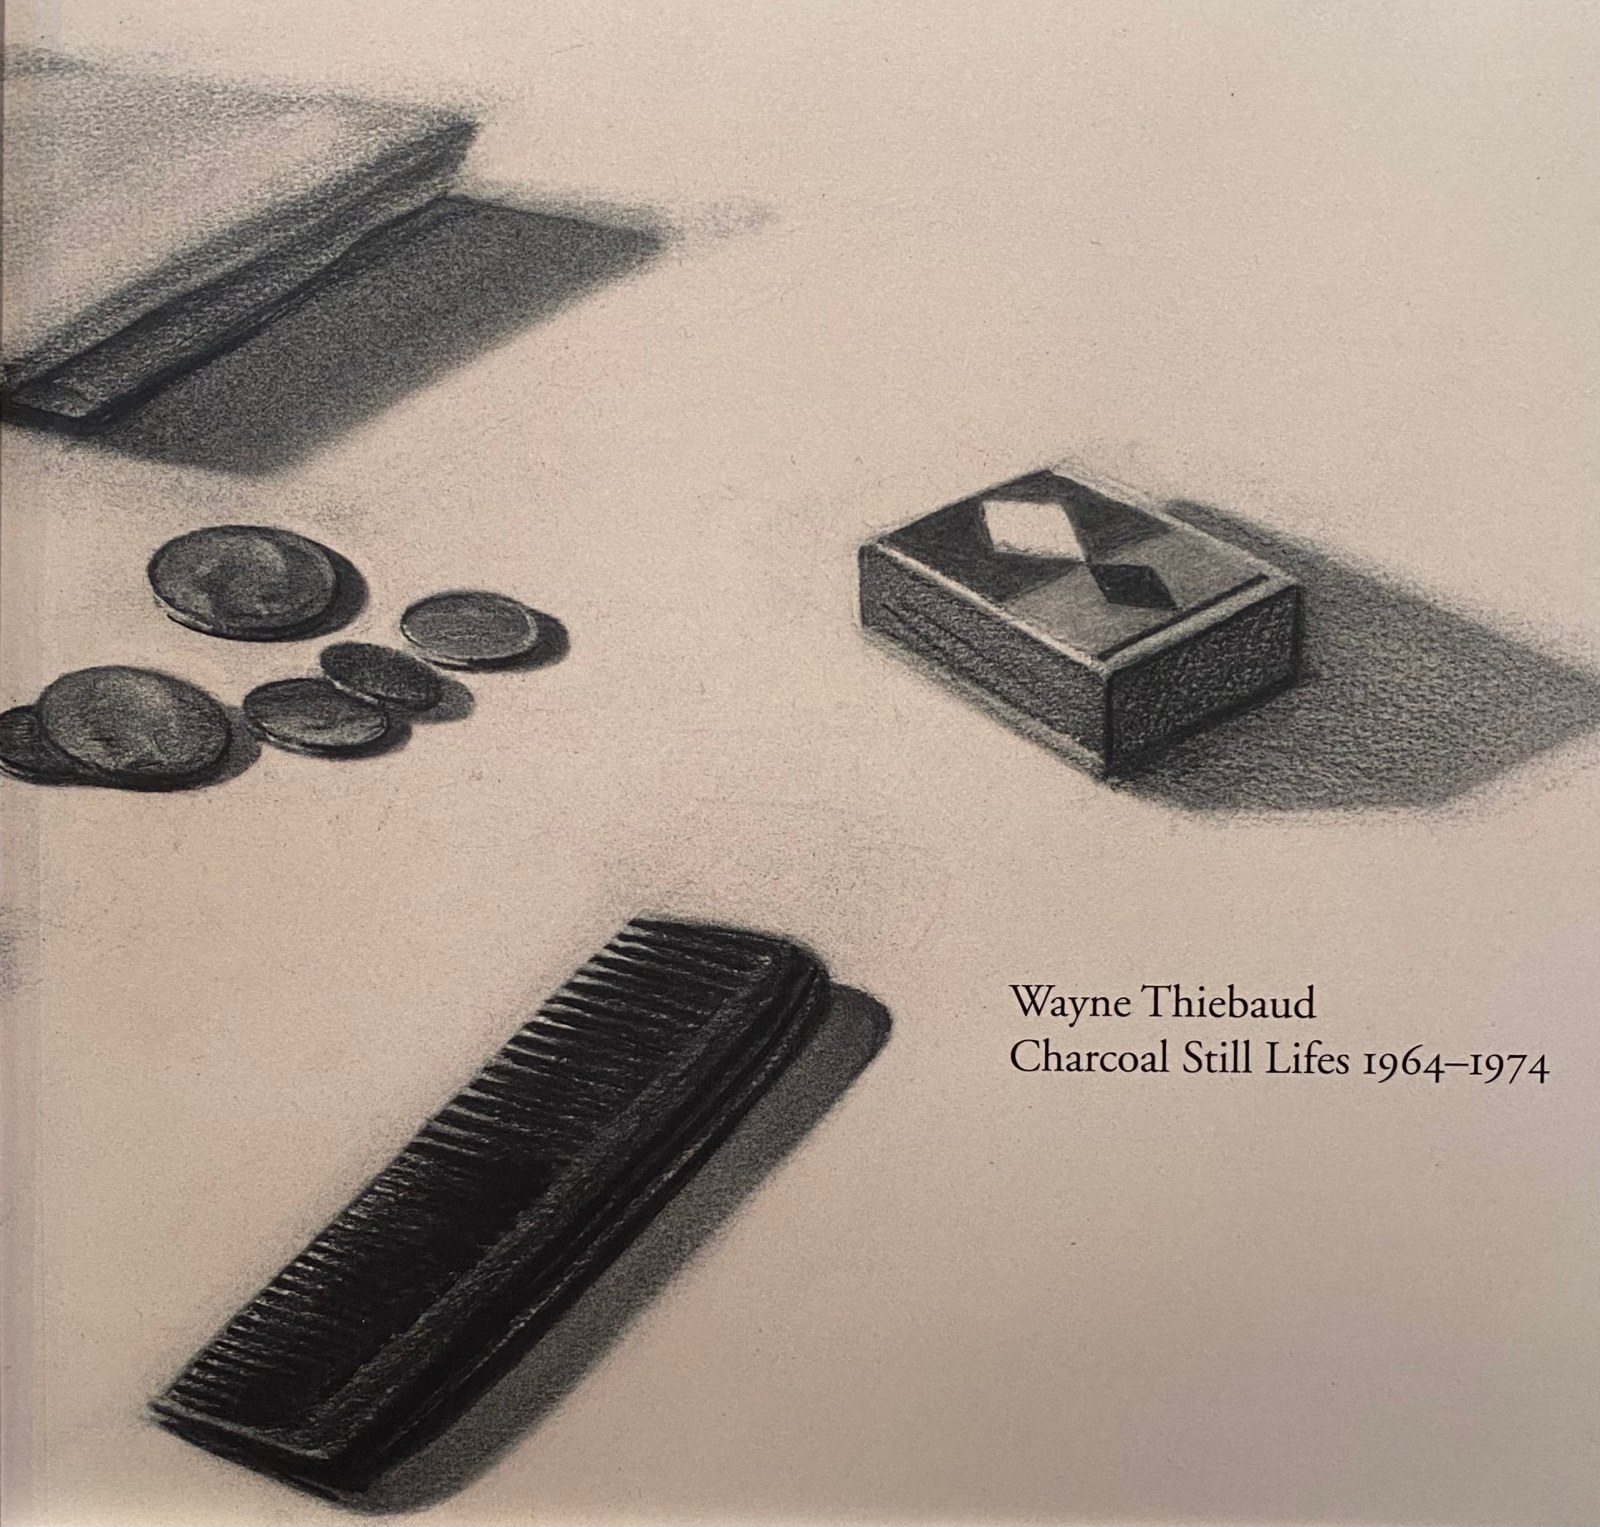 Wayne Thiebaud: Charcoal Still Lifes 1964-1974 - April 9 - October 9, 2010 - Publications - Paul Thiebaud Gallery